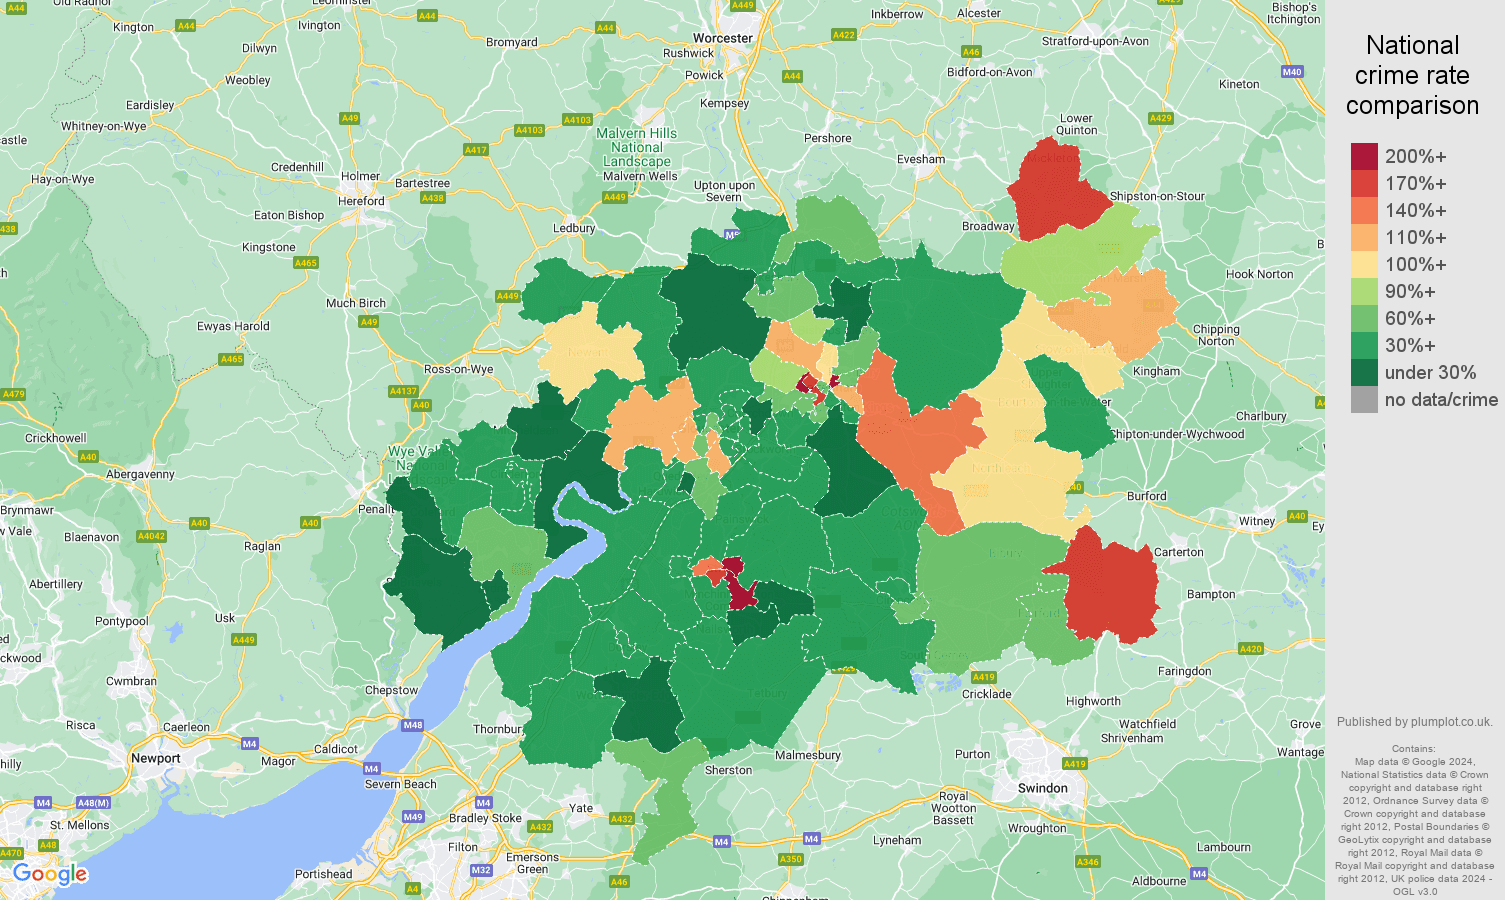 Gloucester vehicle crime rate comparison map